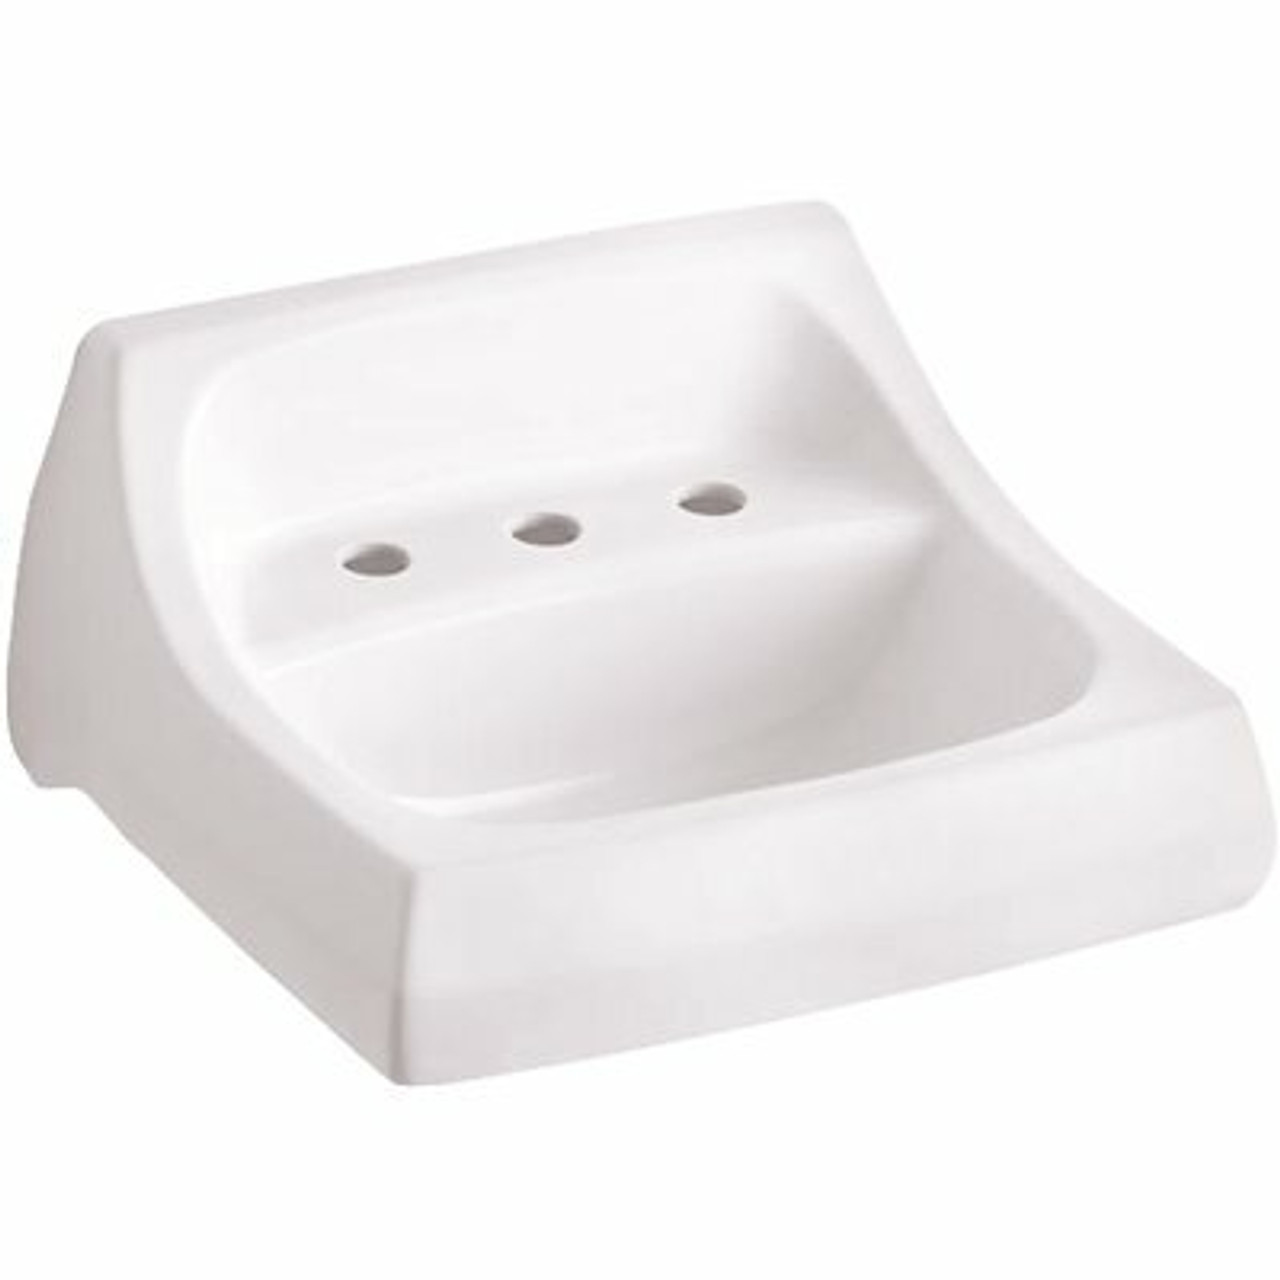 Kohler Kingston Wall-Mount Vitreous China Bathroom Vessel Sink In White With Overflow Drain